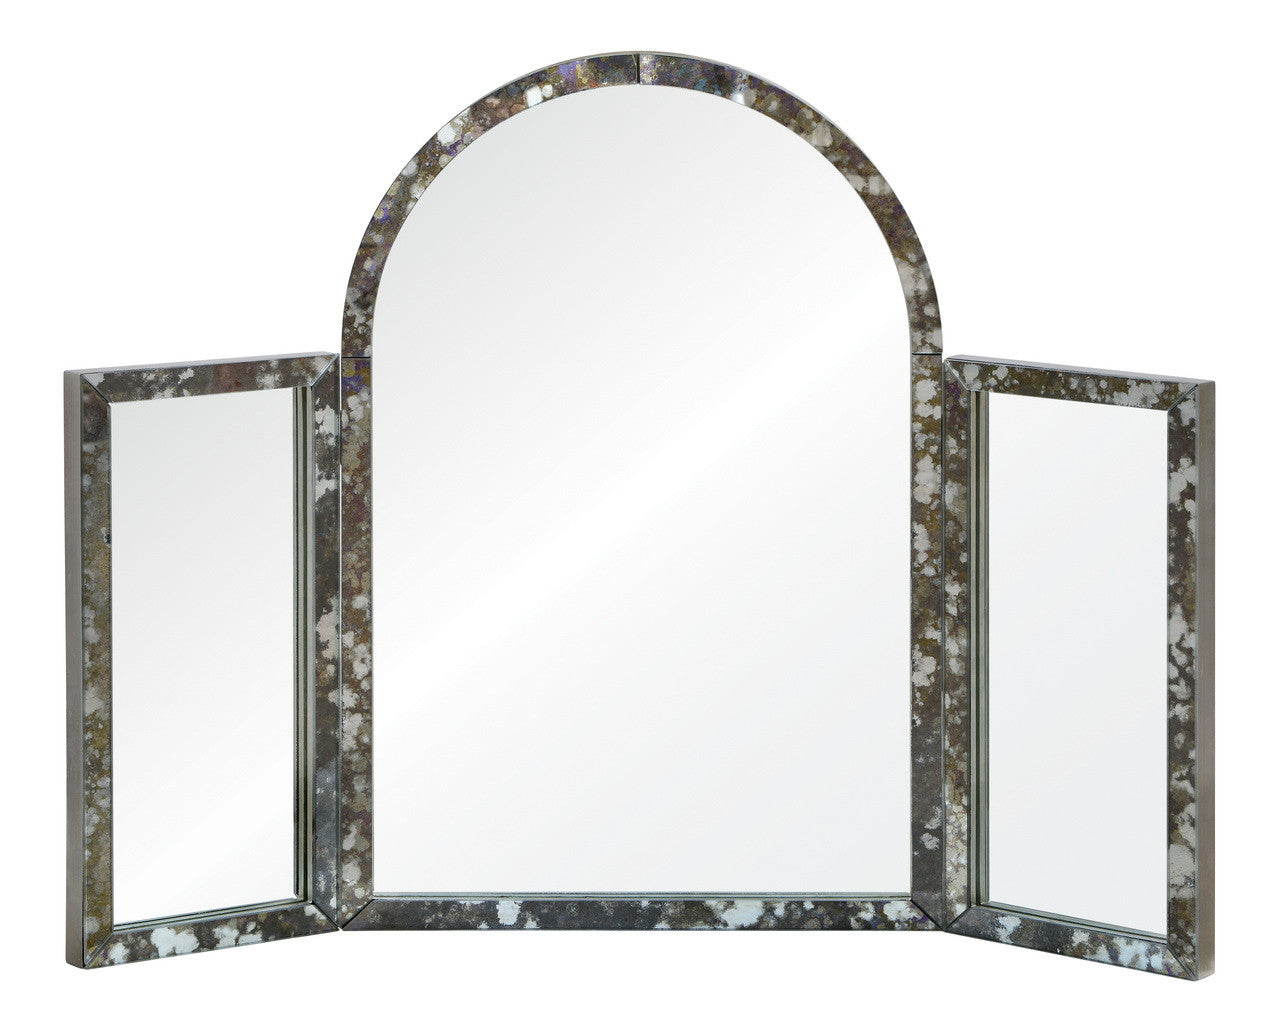 Tri-fold paneled antique mirror frame